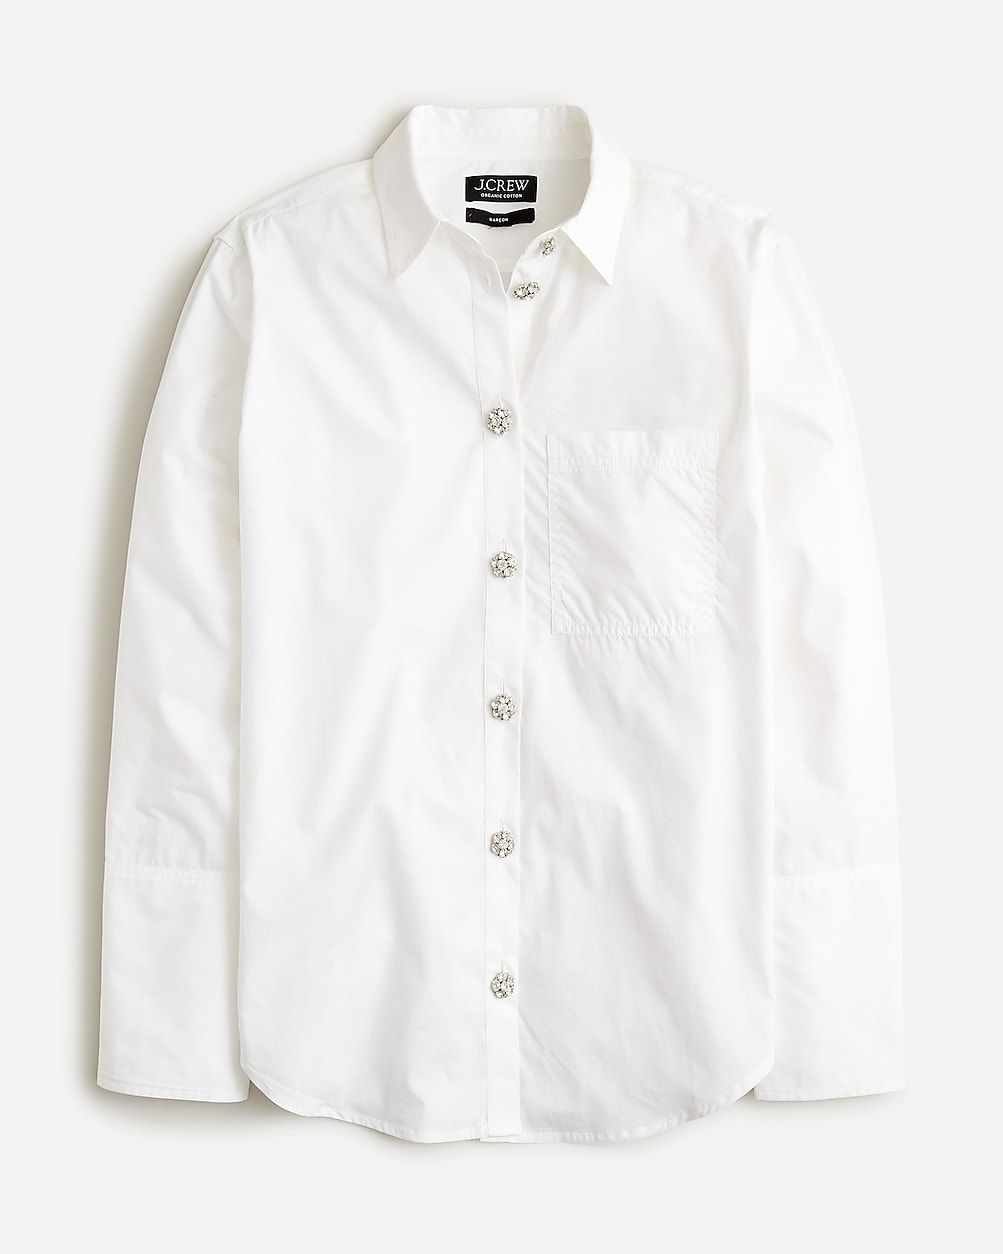 Garçon cotton poplin shirt with jewel buttons | J.Crew US